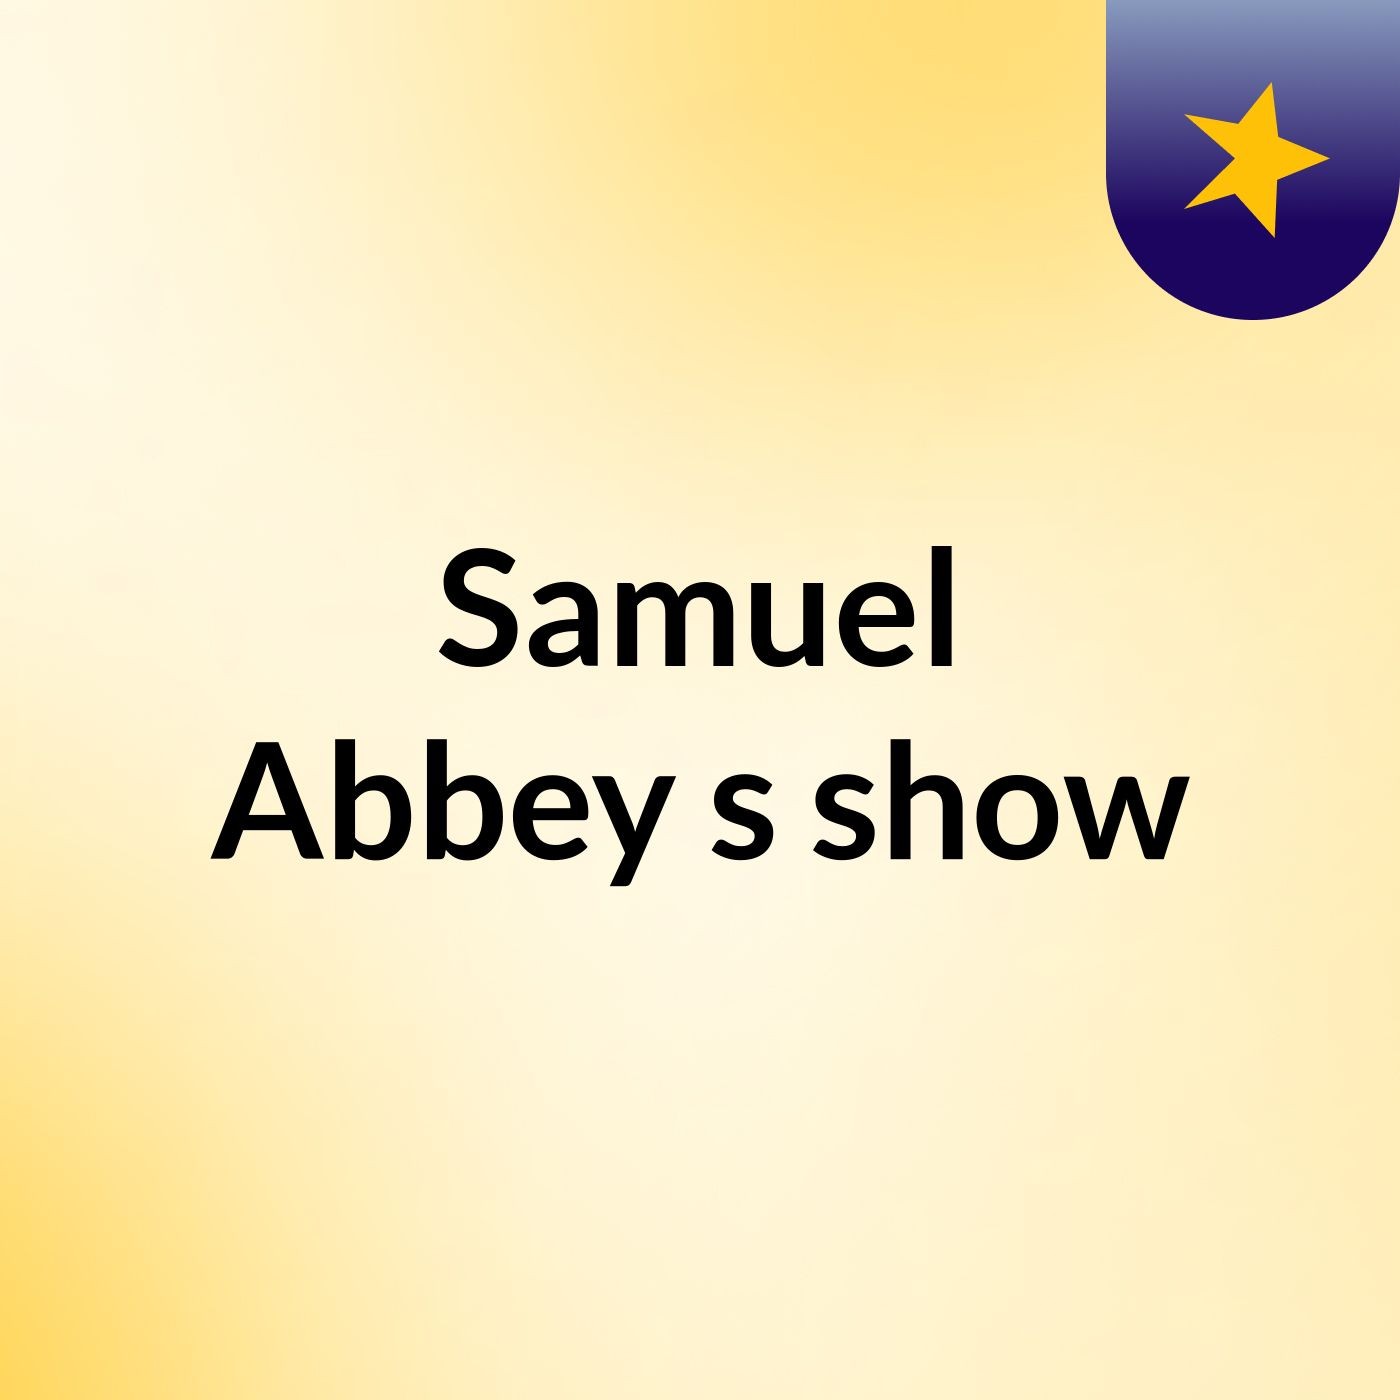 Samuel Abbey's show